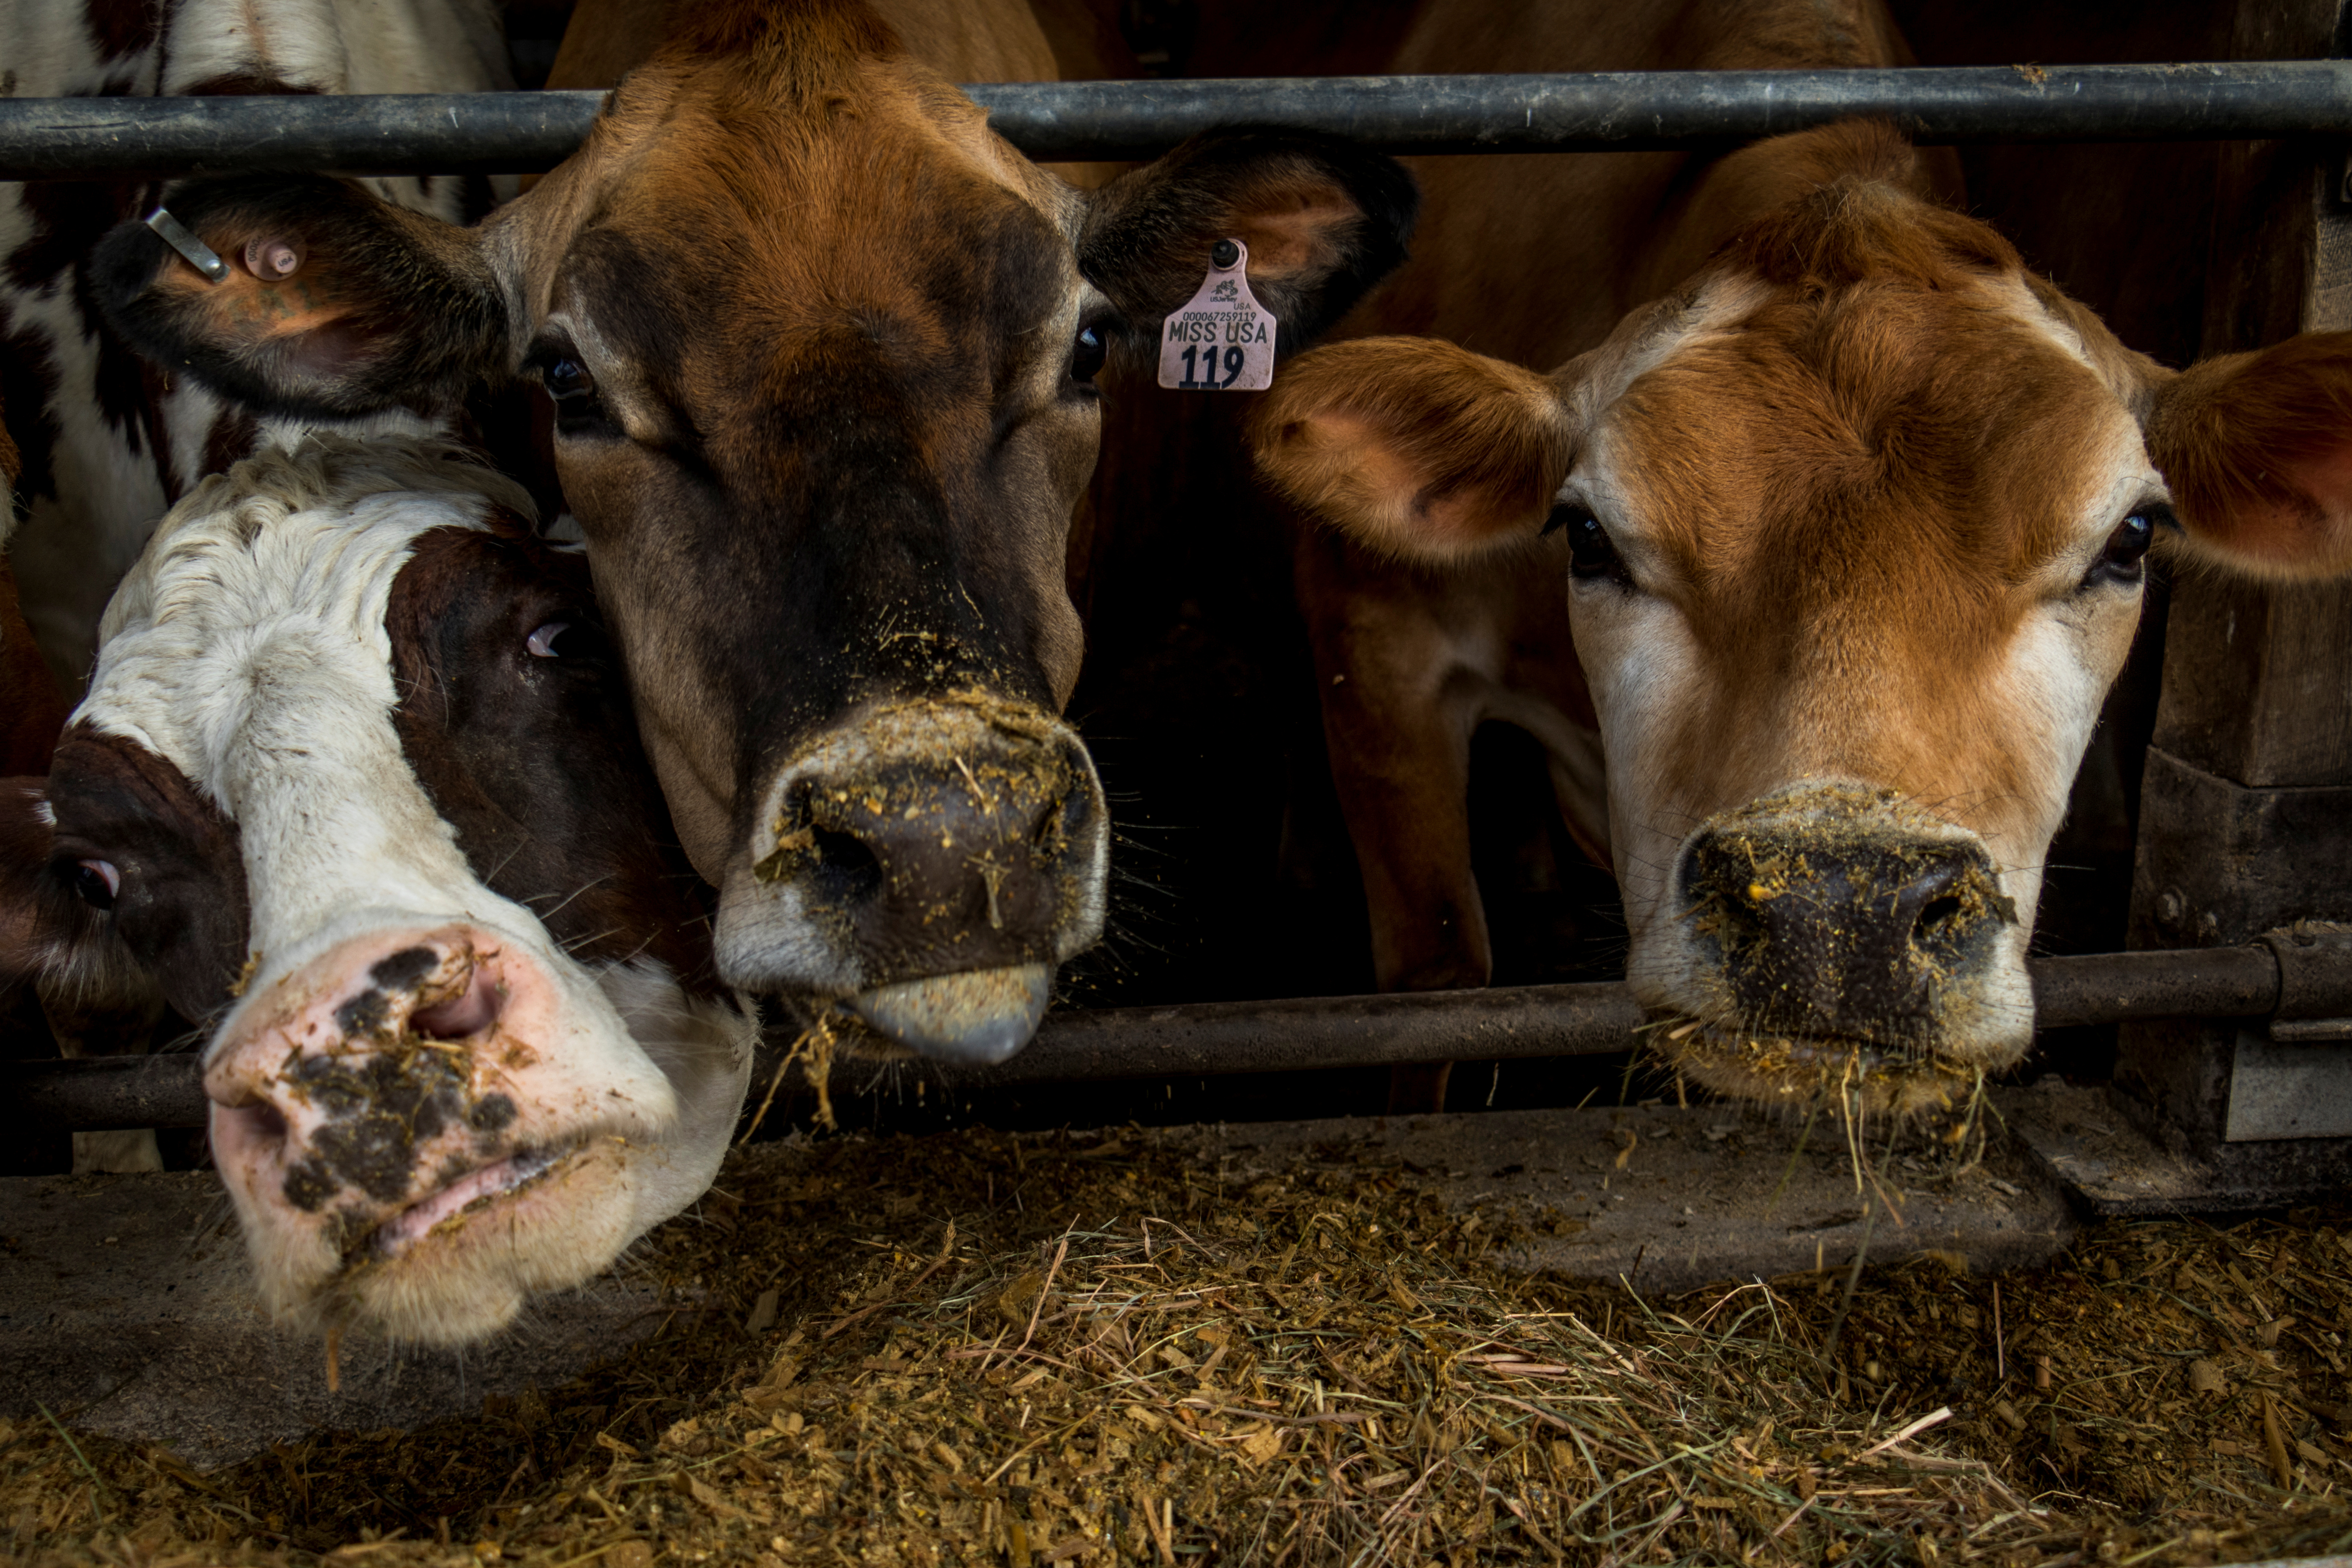 NAFTA deal gives little help to U.S. dairy farmers